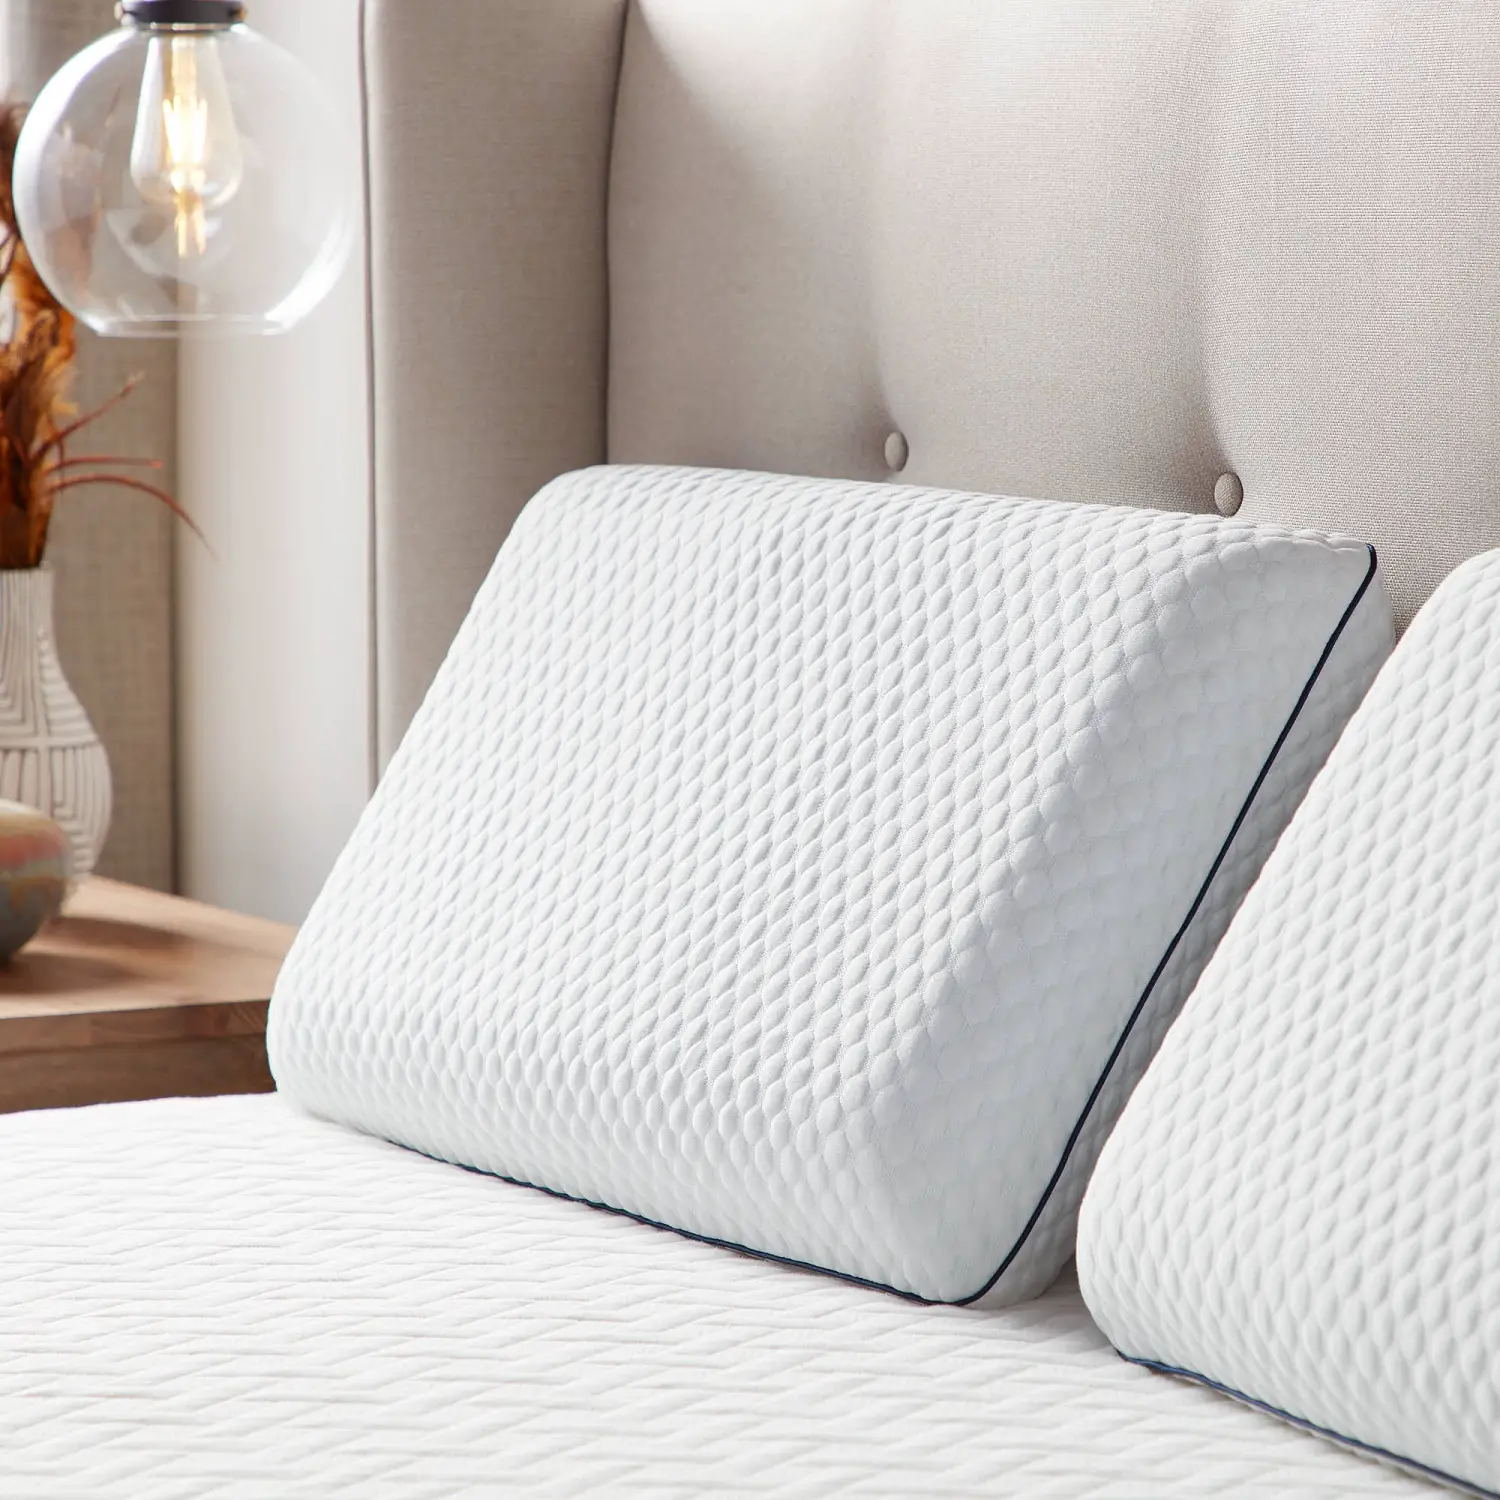 Standard King Queen Size Memory Foam Pillows Gel Comfort Soft Removable ...